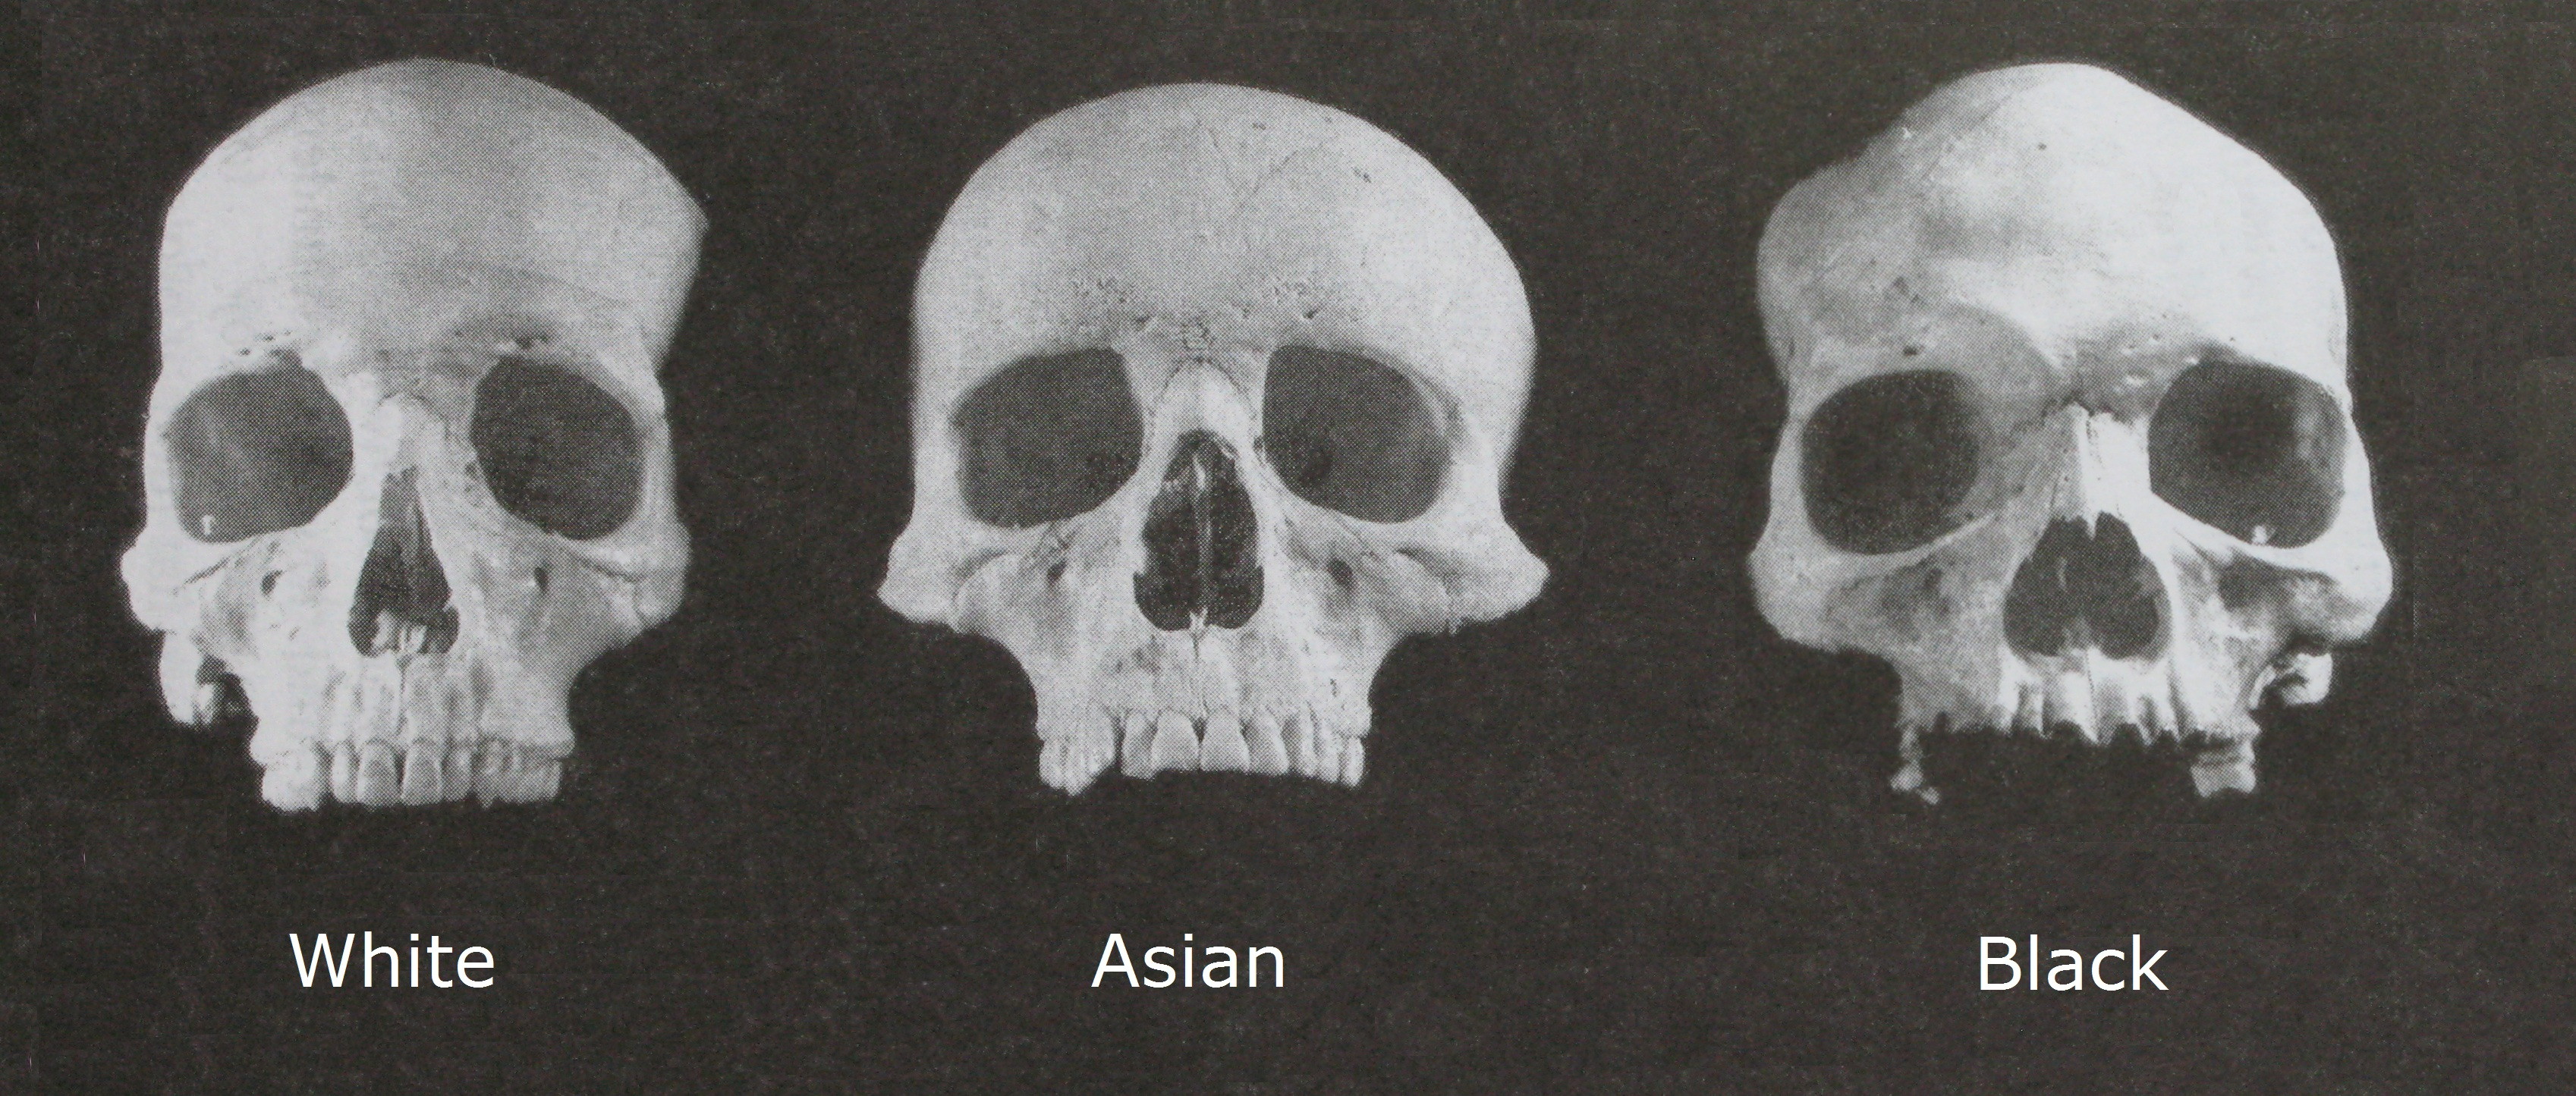 Human Differentiation Evolution Of Racial Characteristics